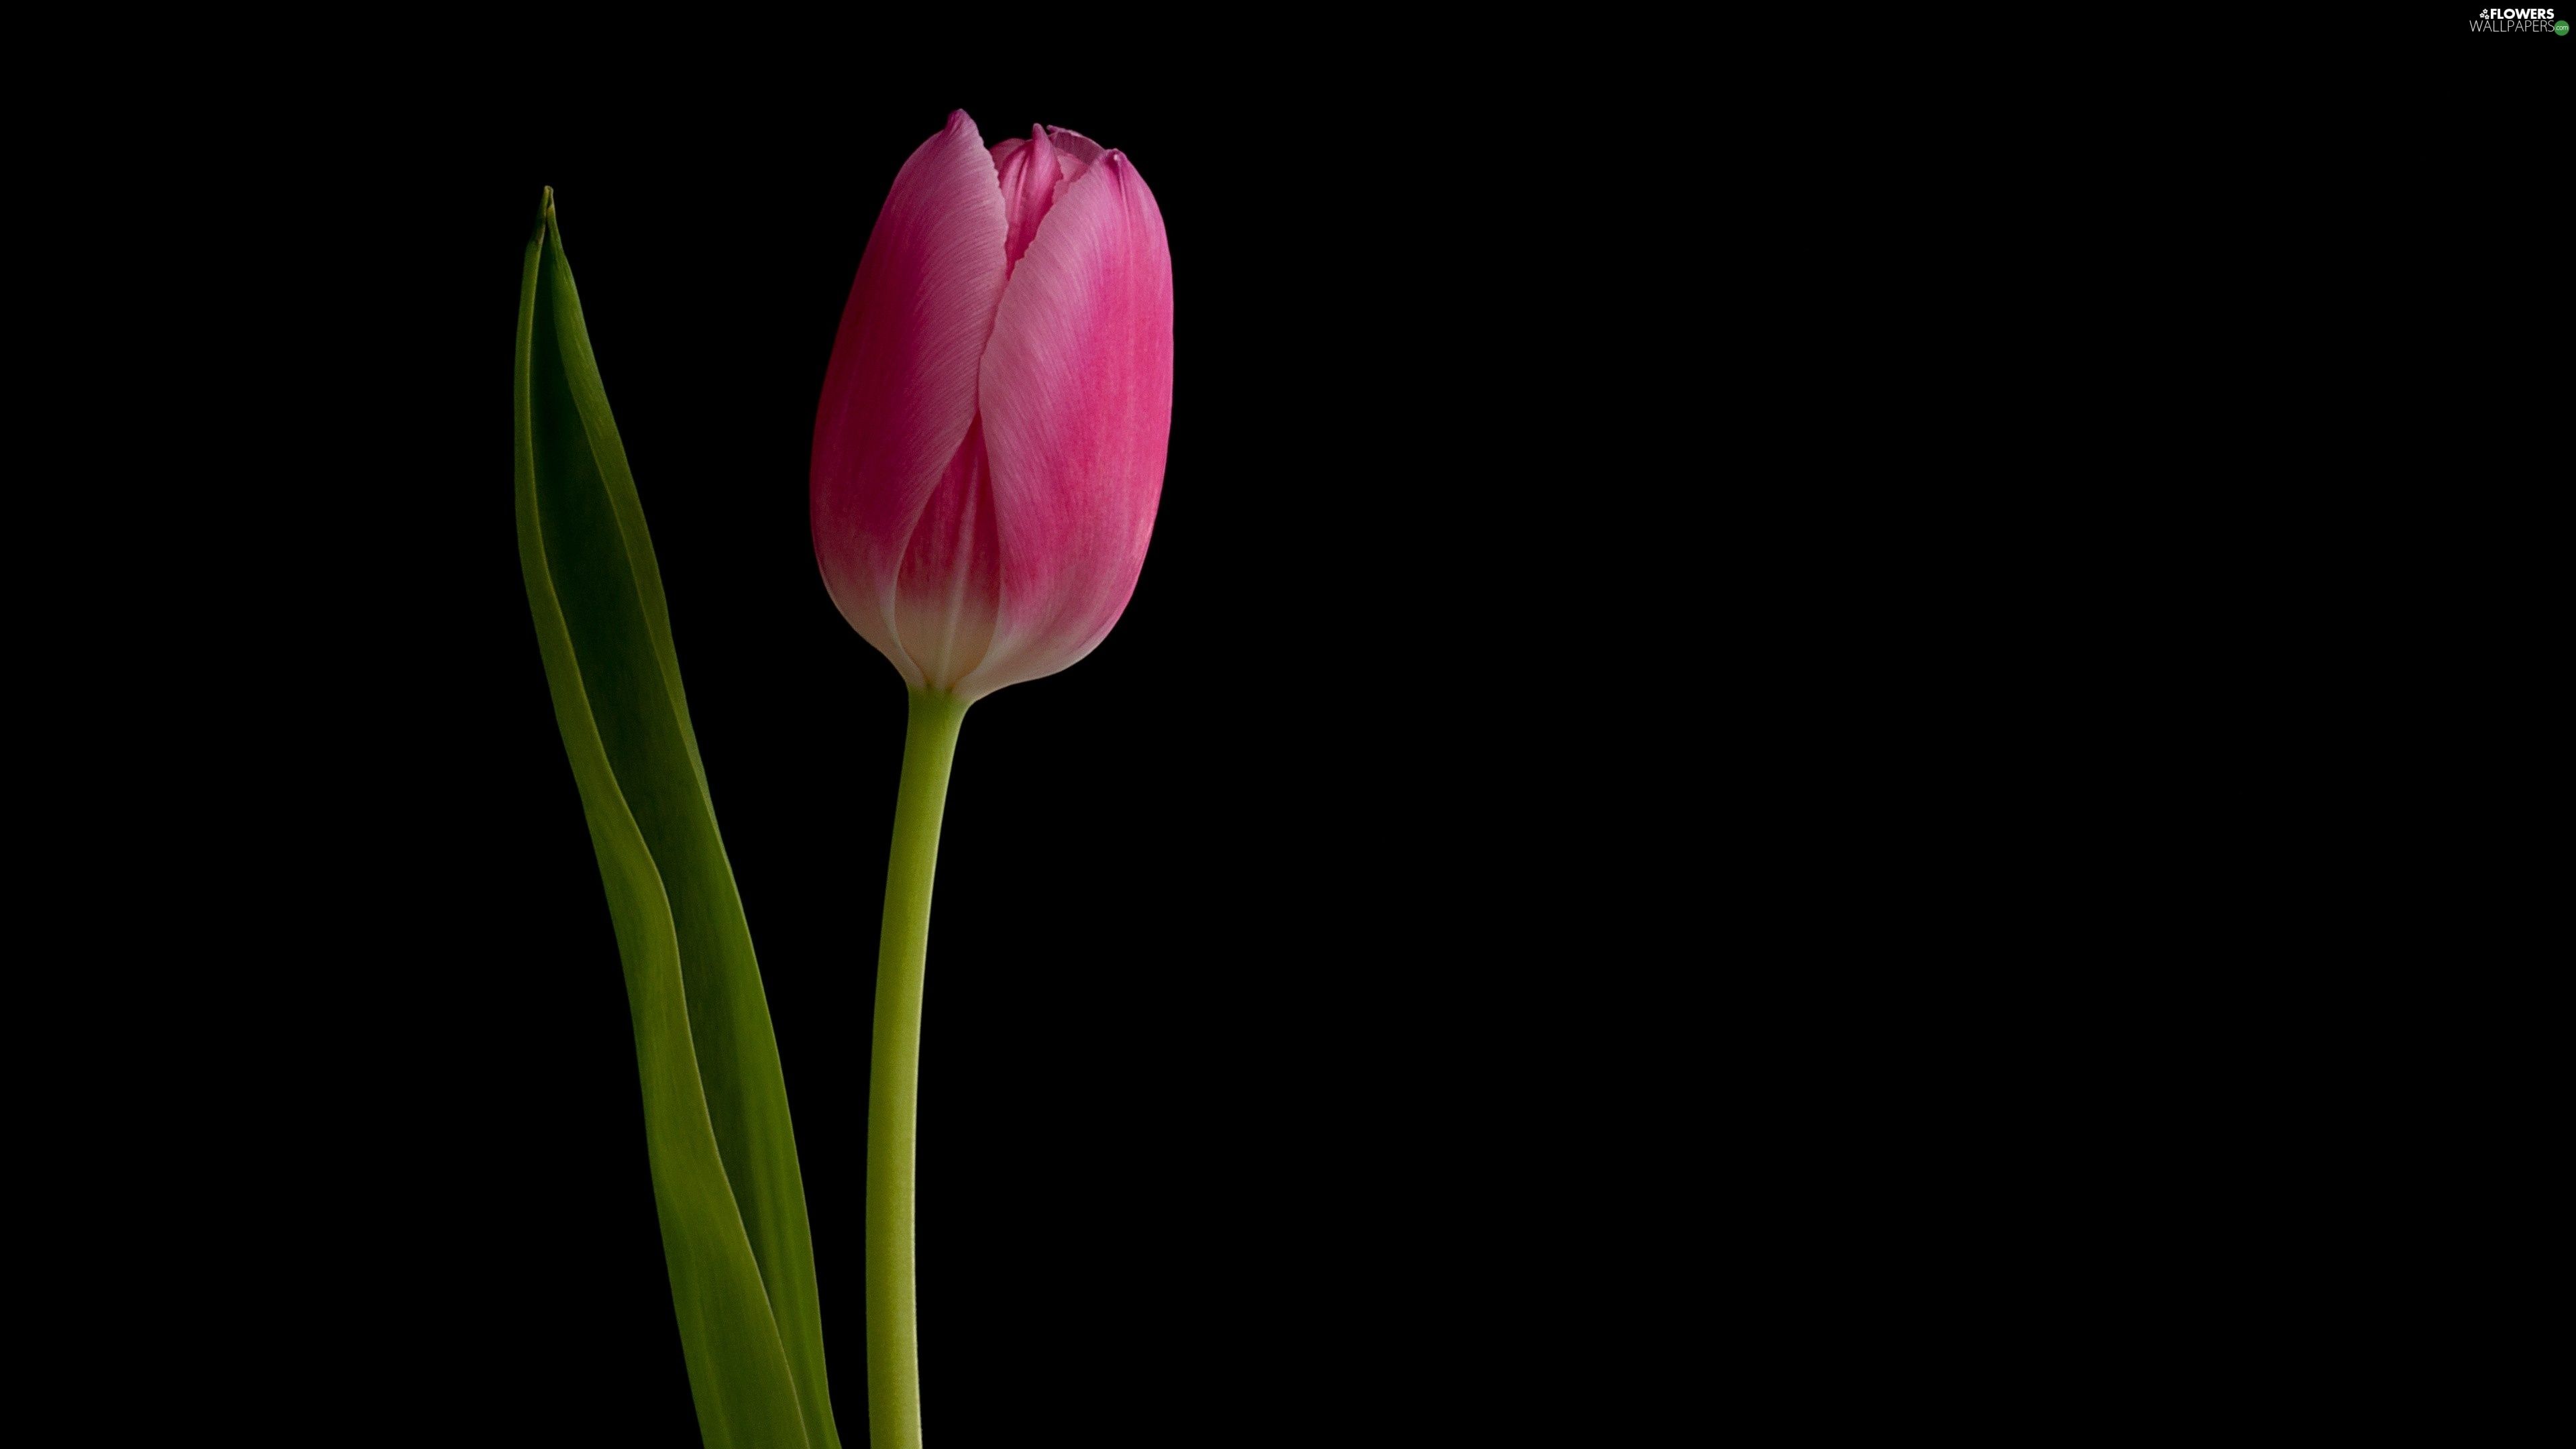 HD Black Tulips Wallpaper Download Free feelgrafix. Tulips